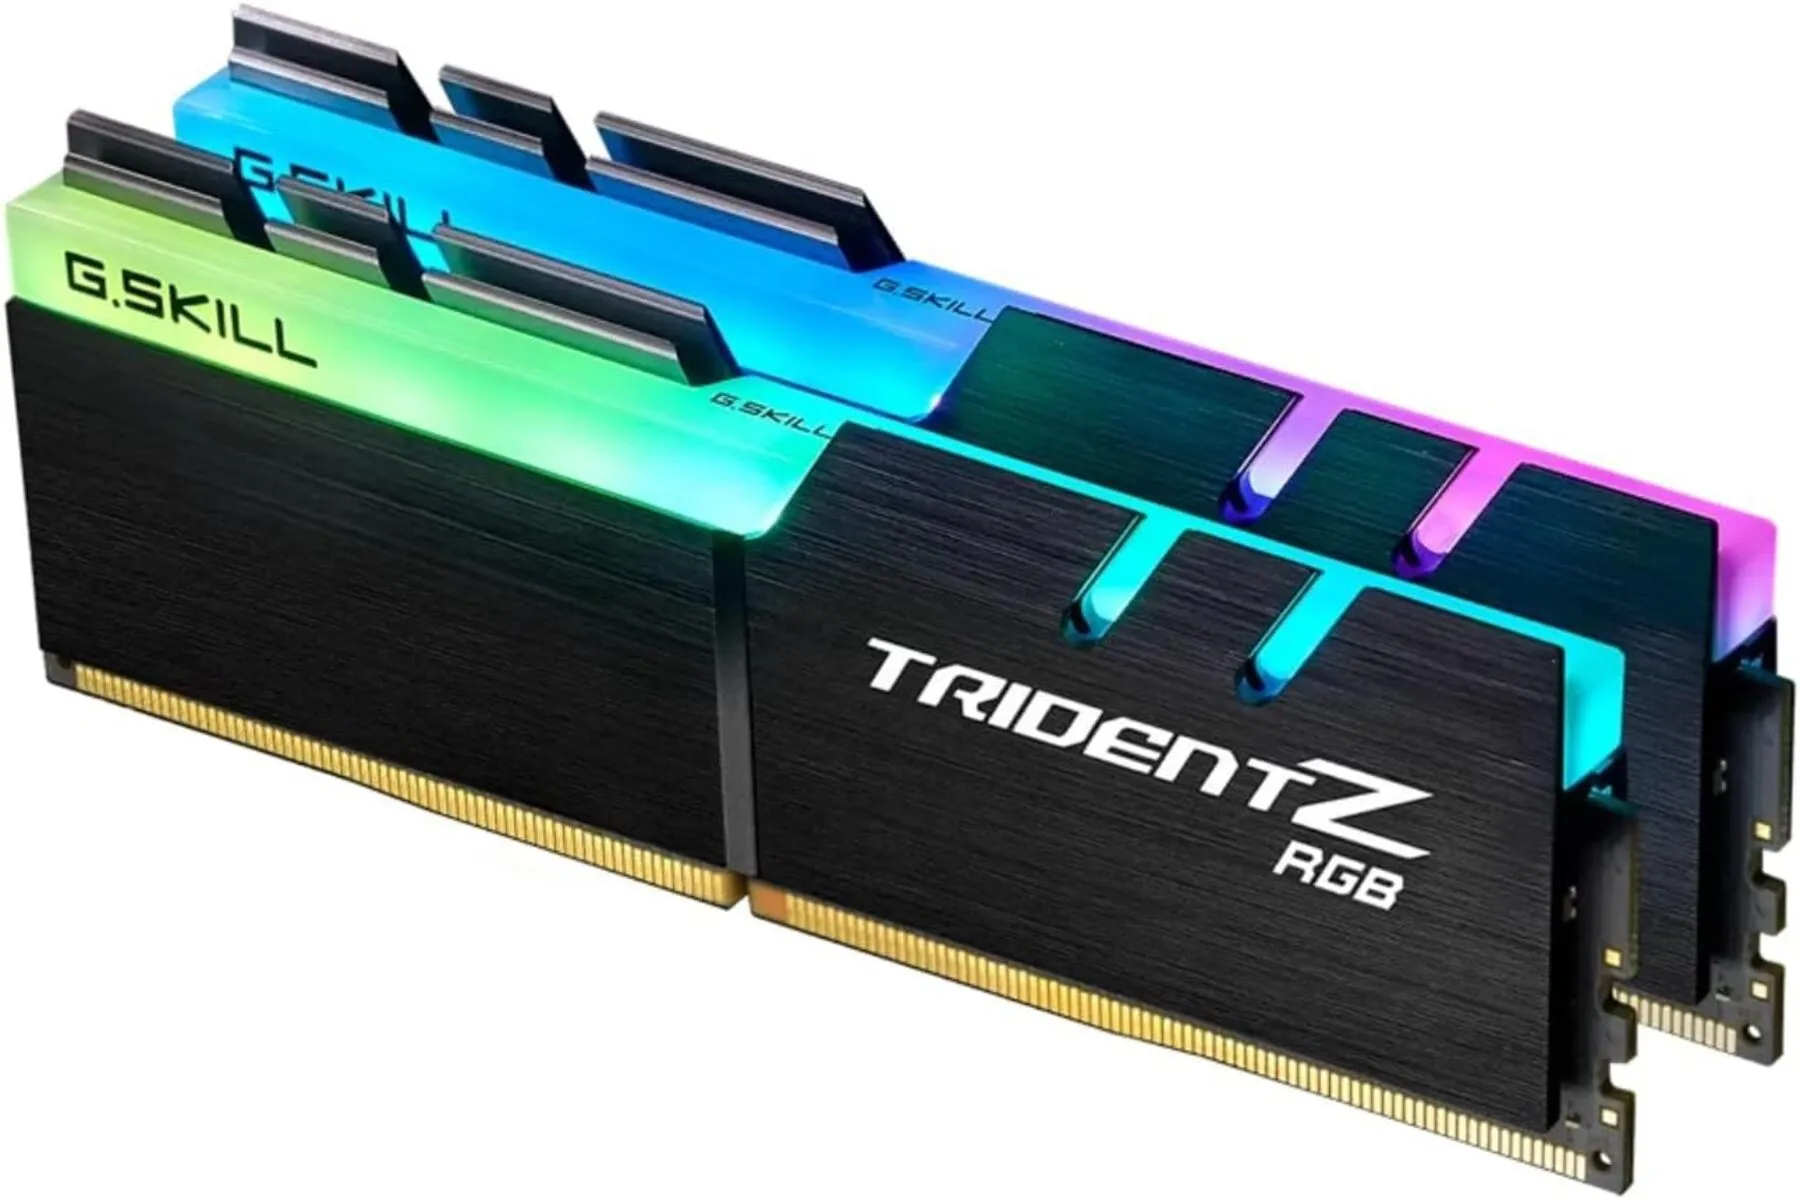 G.SKILL Trident Z RGB Series DDR4 RAM